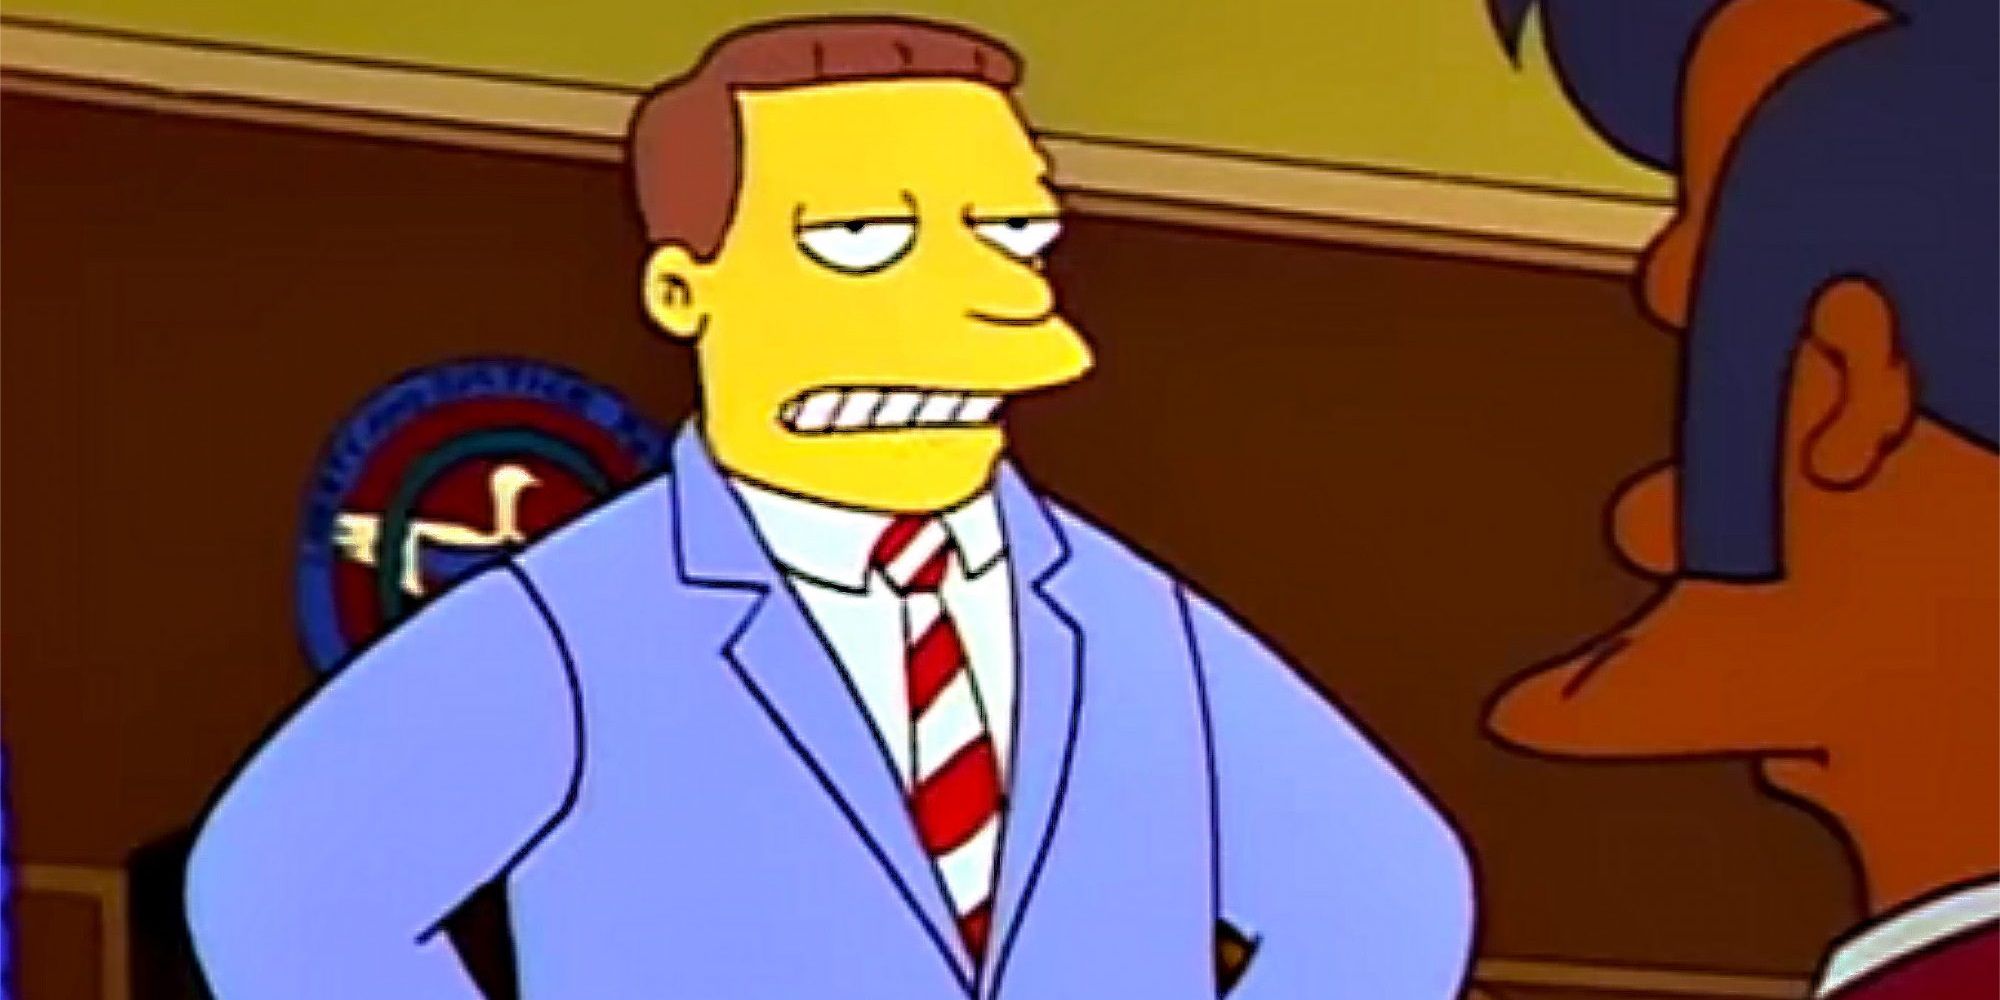 Lionel Hutz talks to Apu in court in The Simpsons